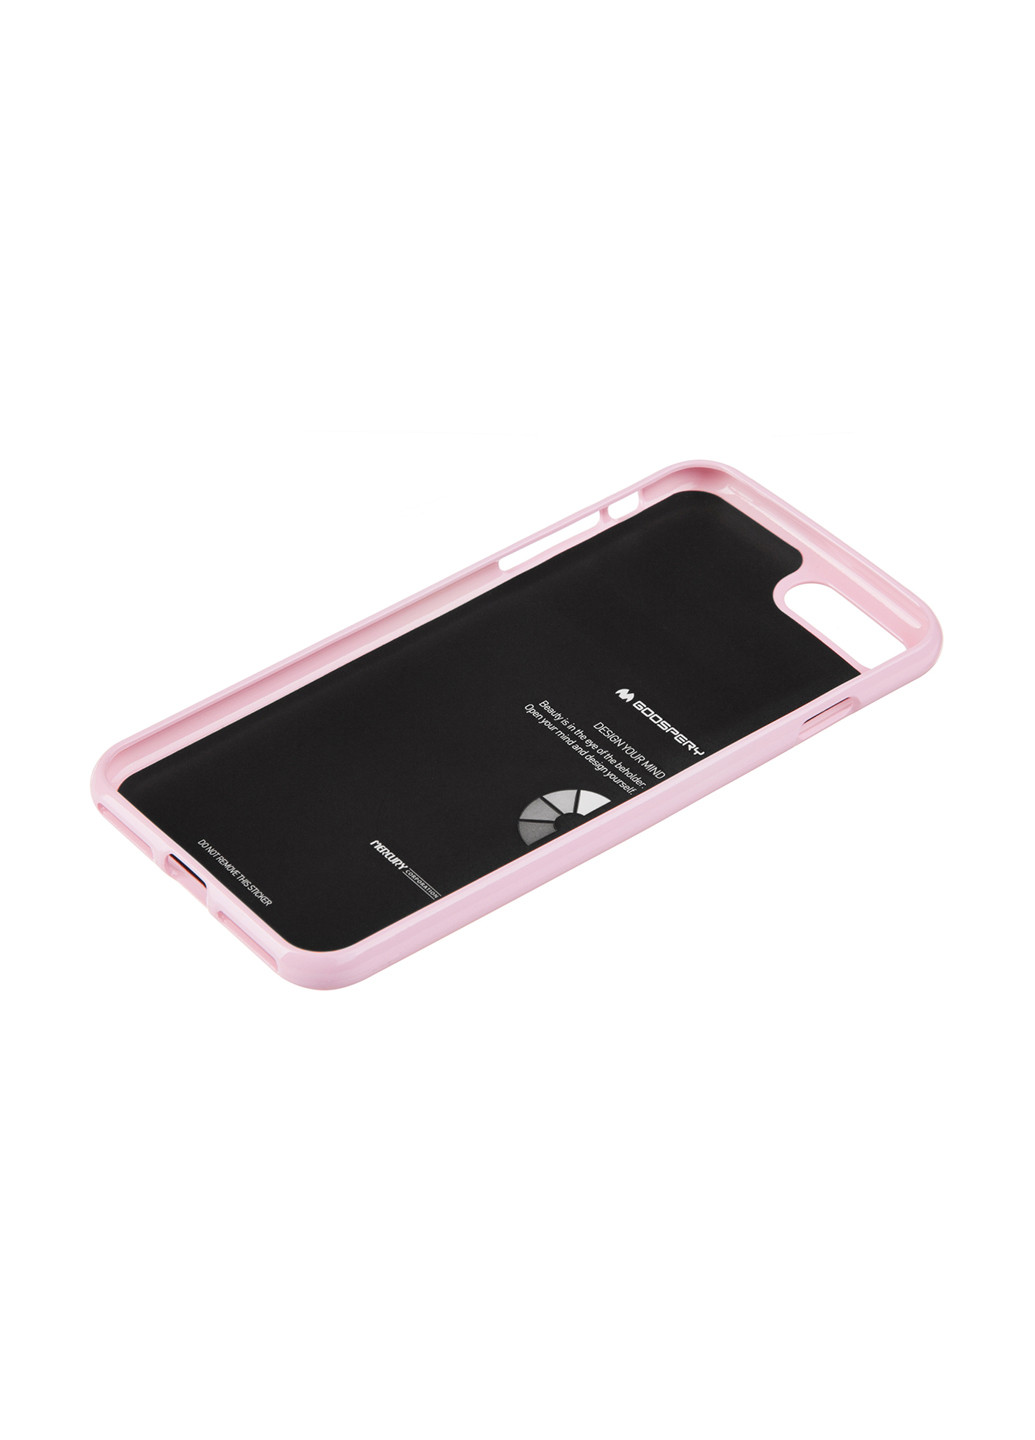 Чохол Goospery для Apple iPhone 7/8 Plus. Jelly Case. PINK рожевий